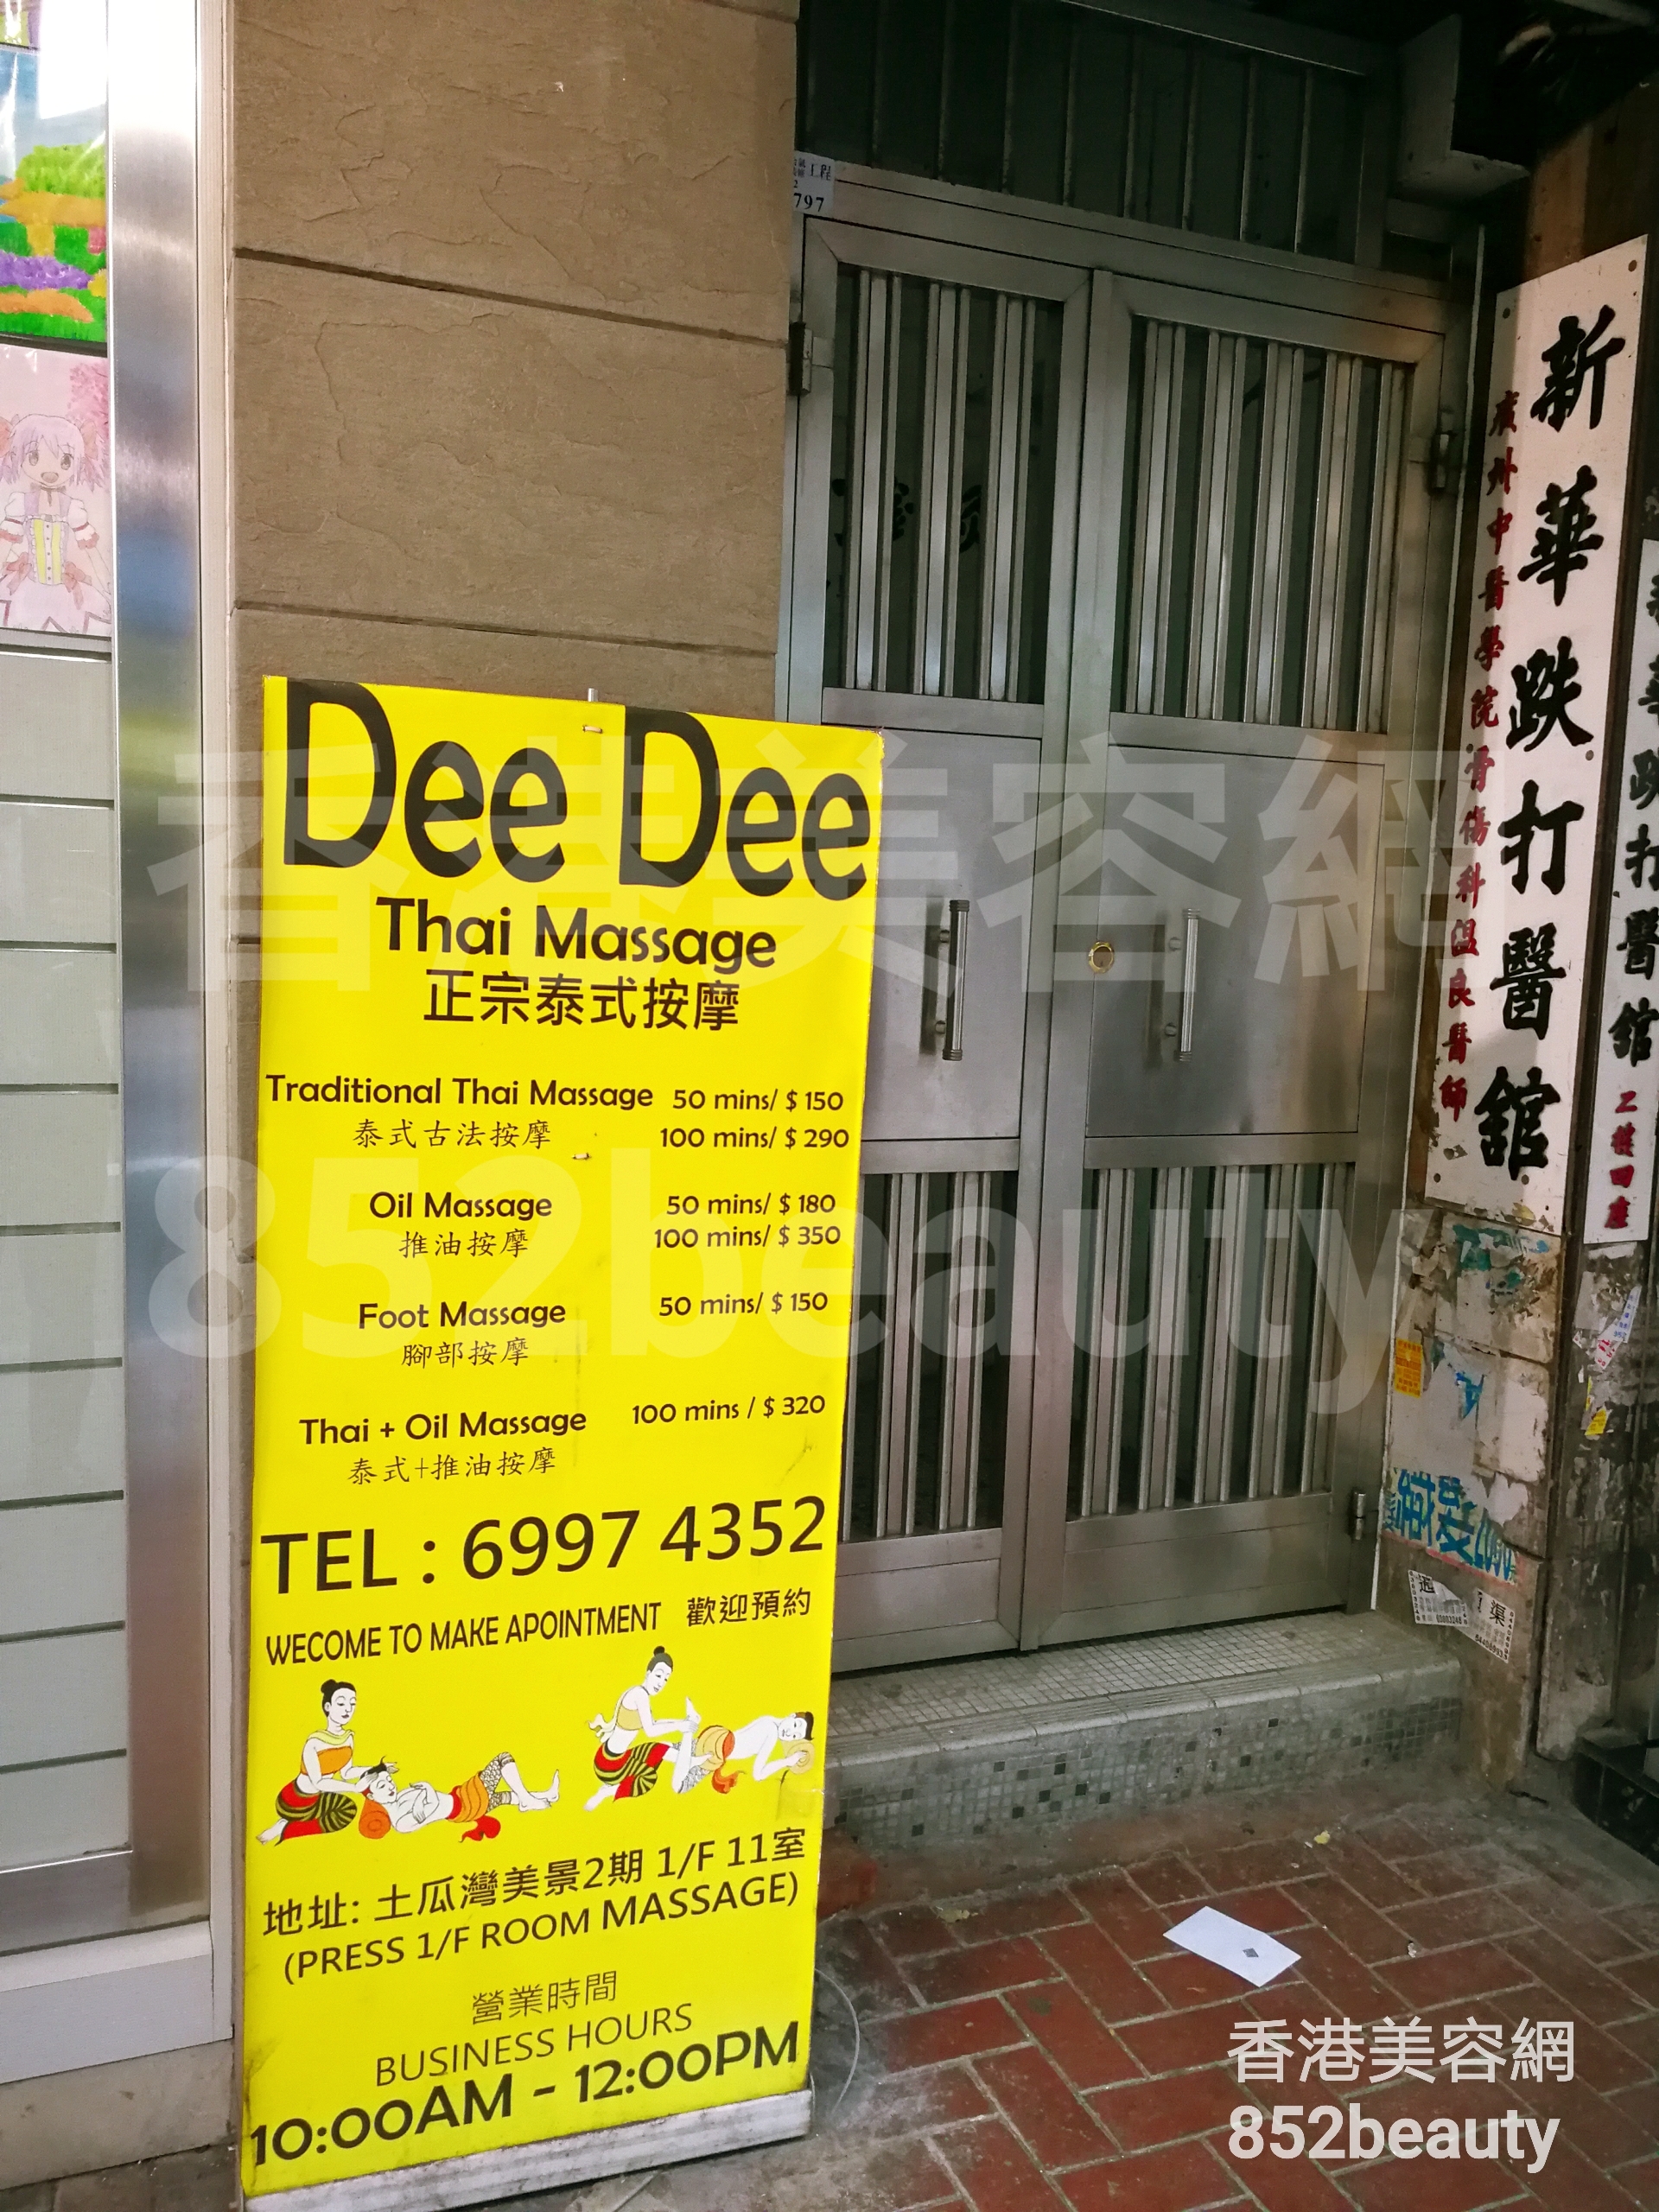 香港美容網 Hong Kong Beauty Salon 美容院 / 美容師: Dee Dee Thai Massage 正宗泰式按摩